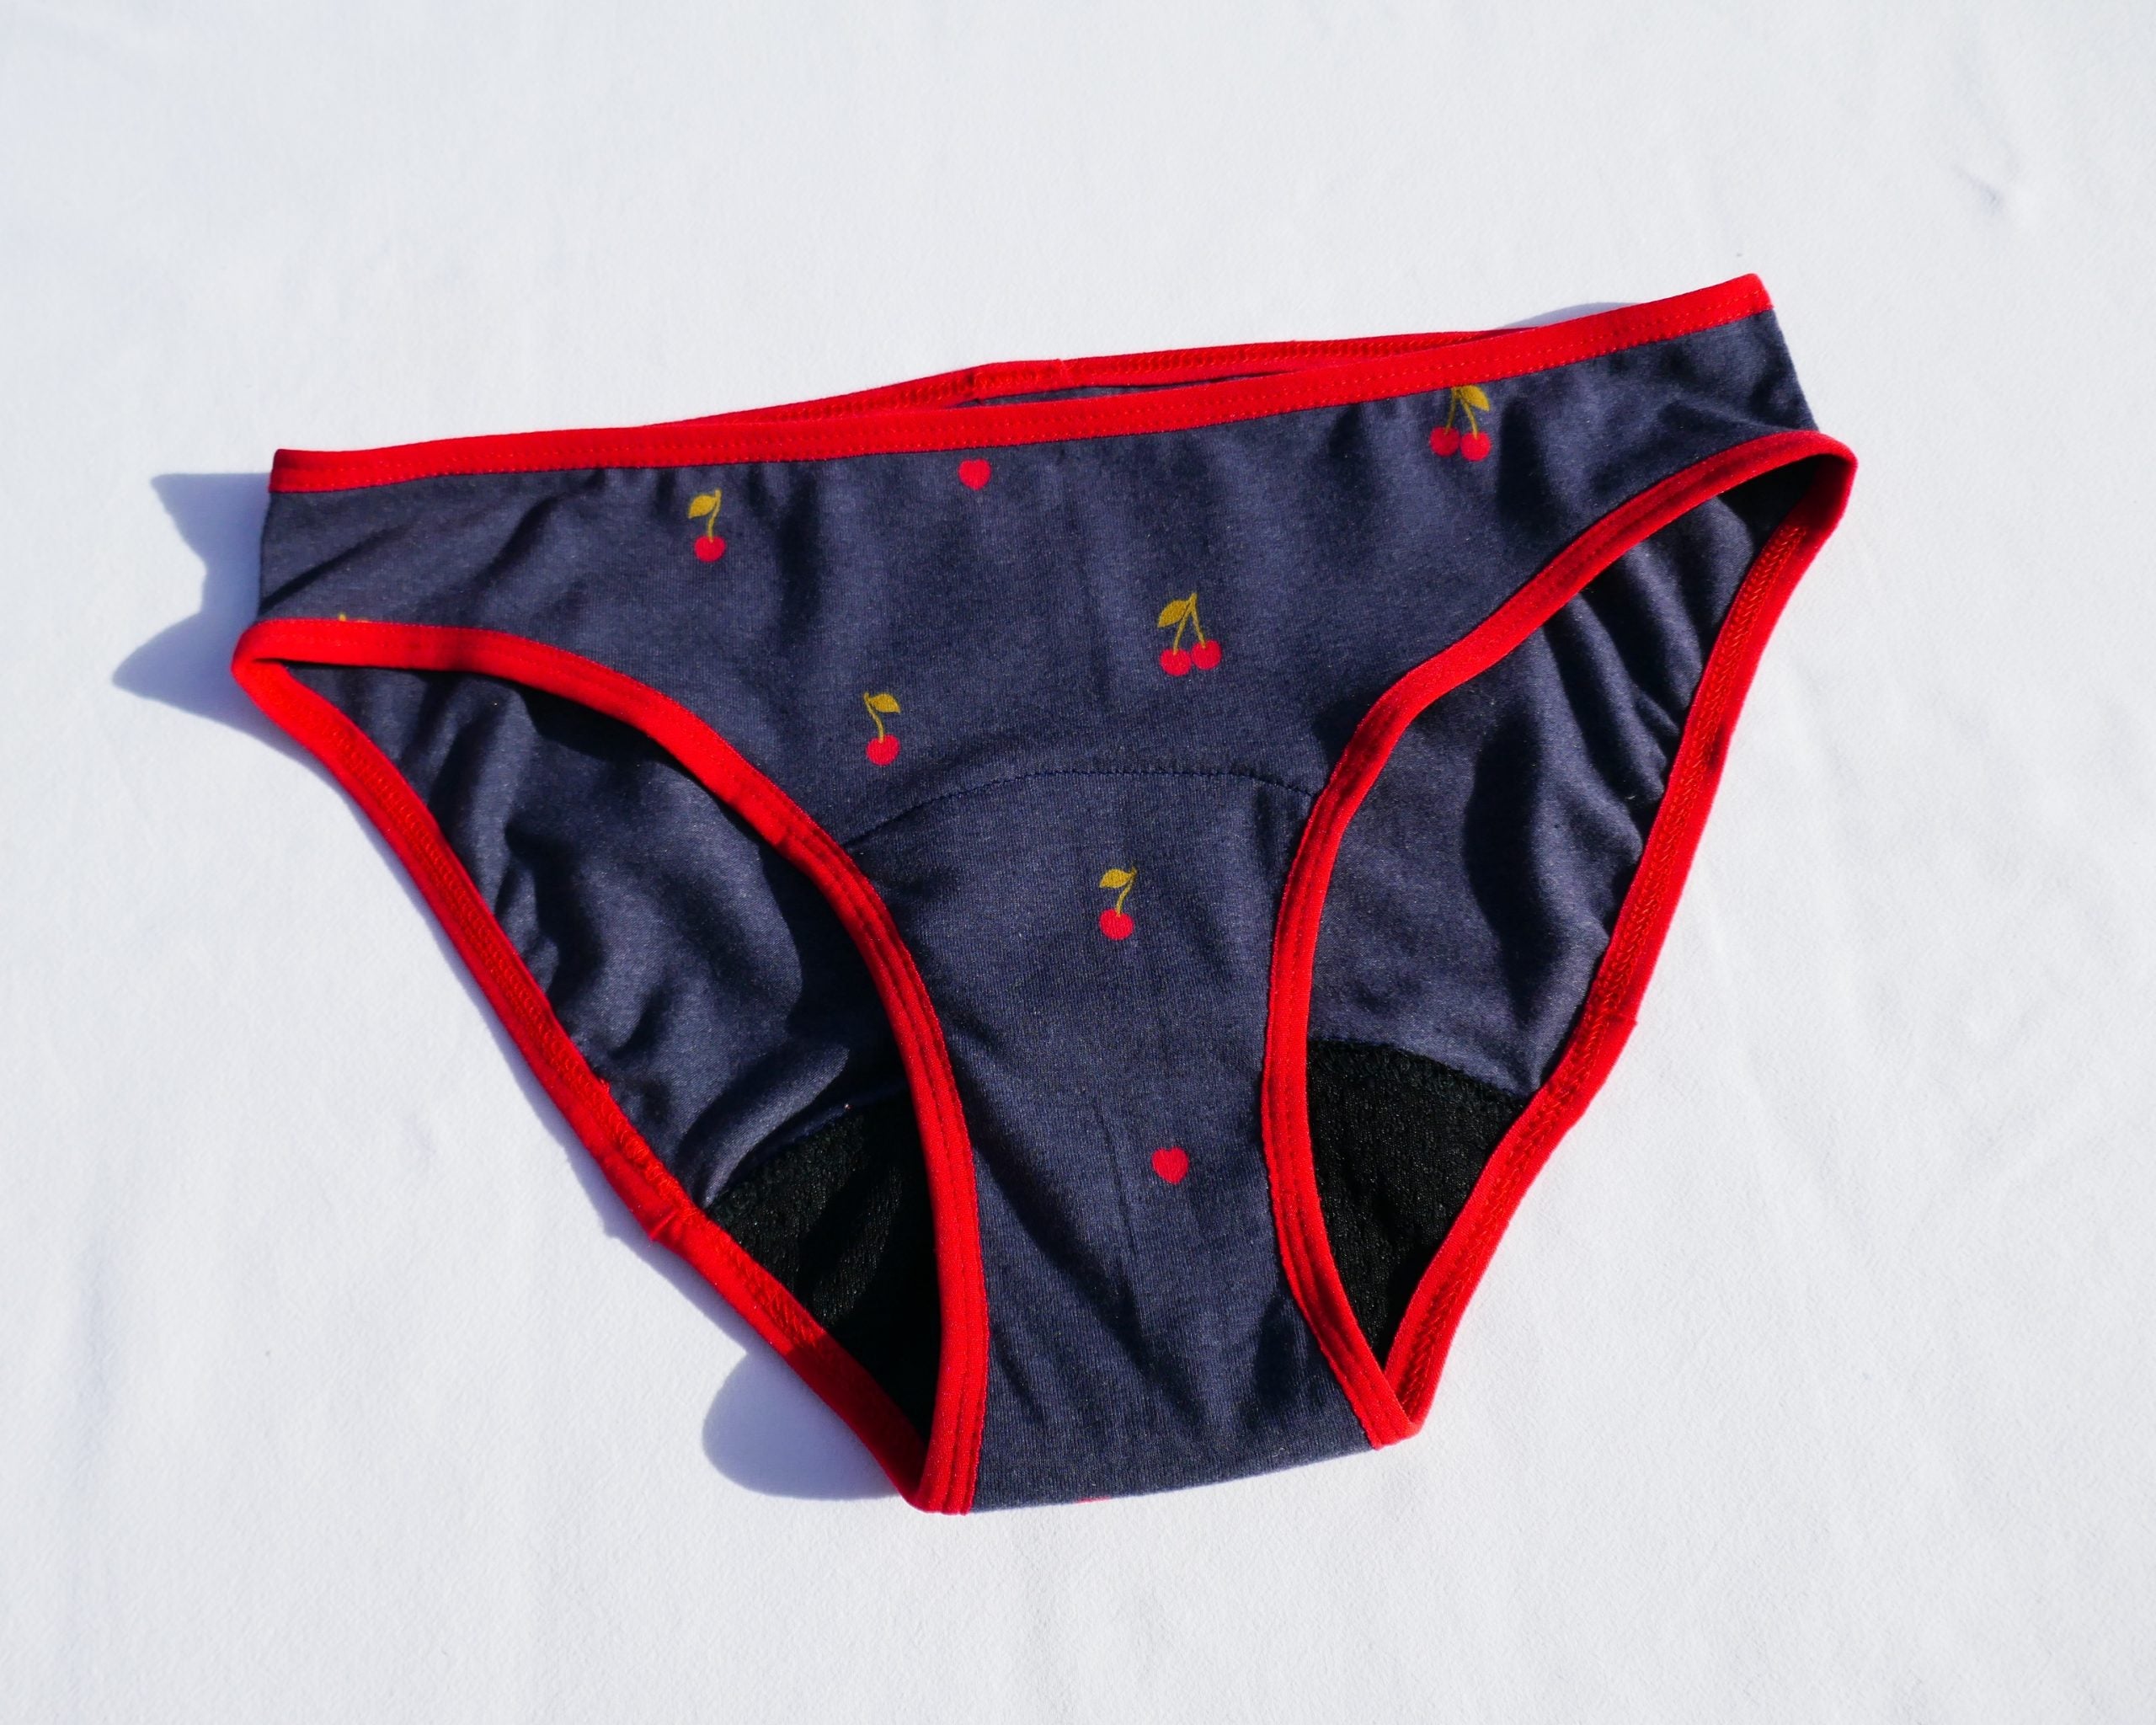 Petits D'om Child/Teen Muun Period Underwear